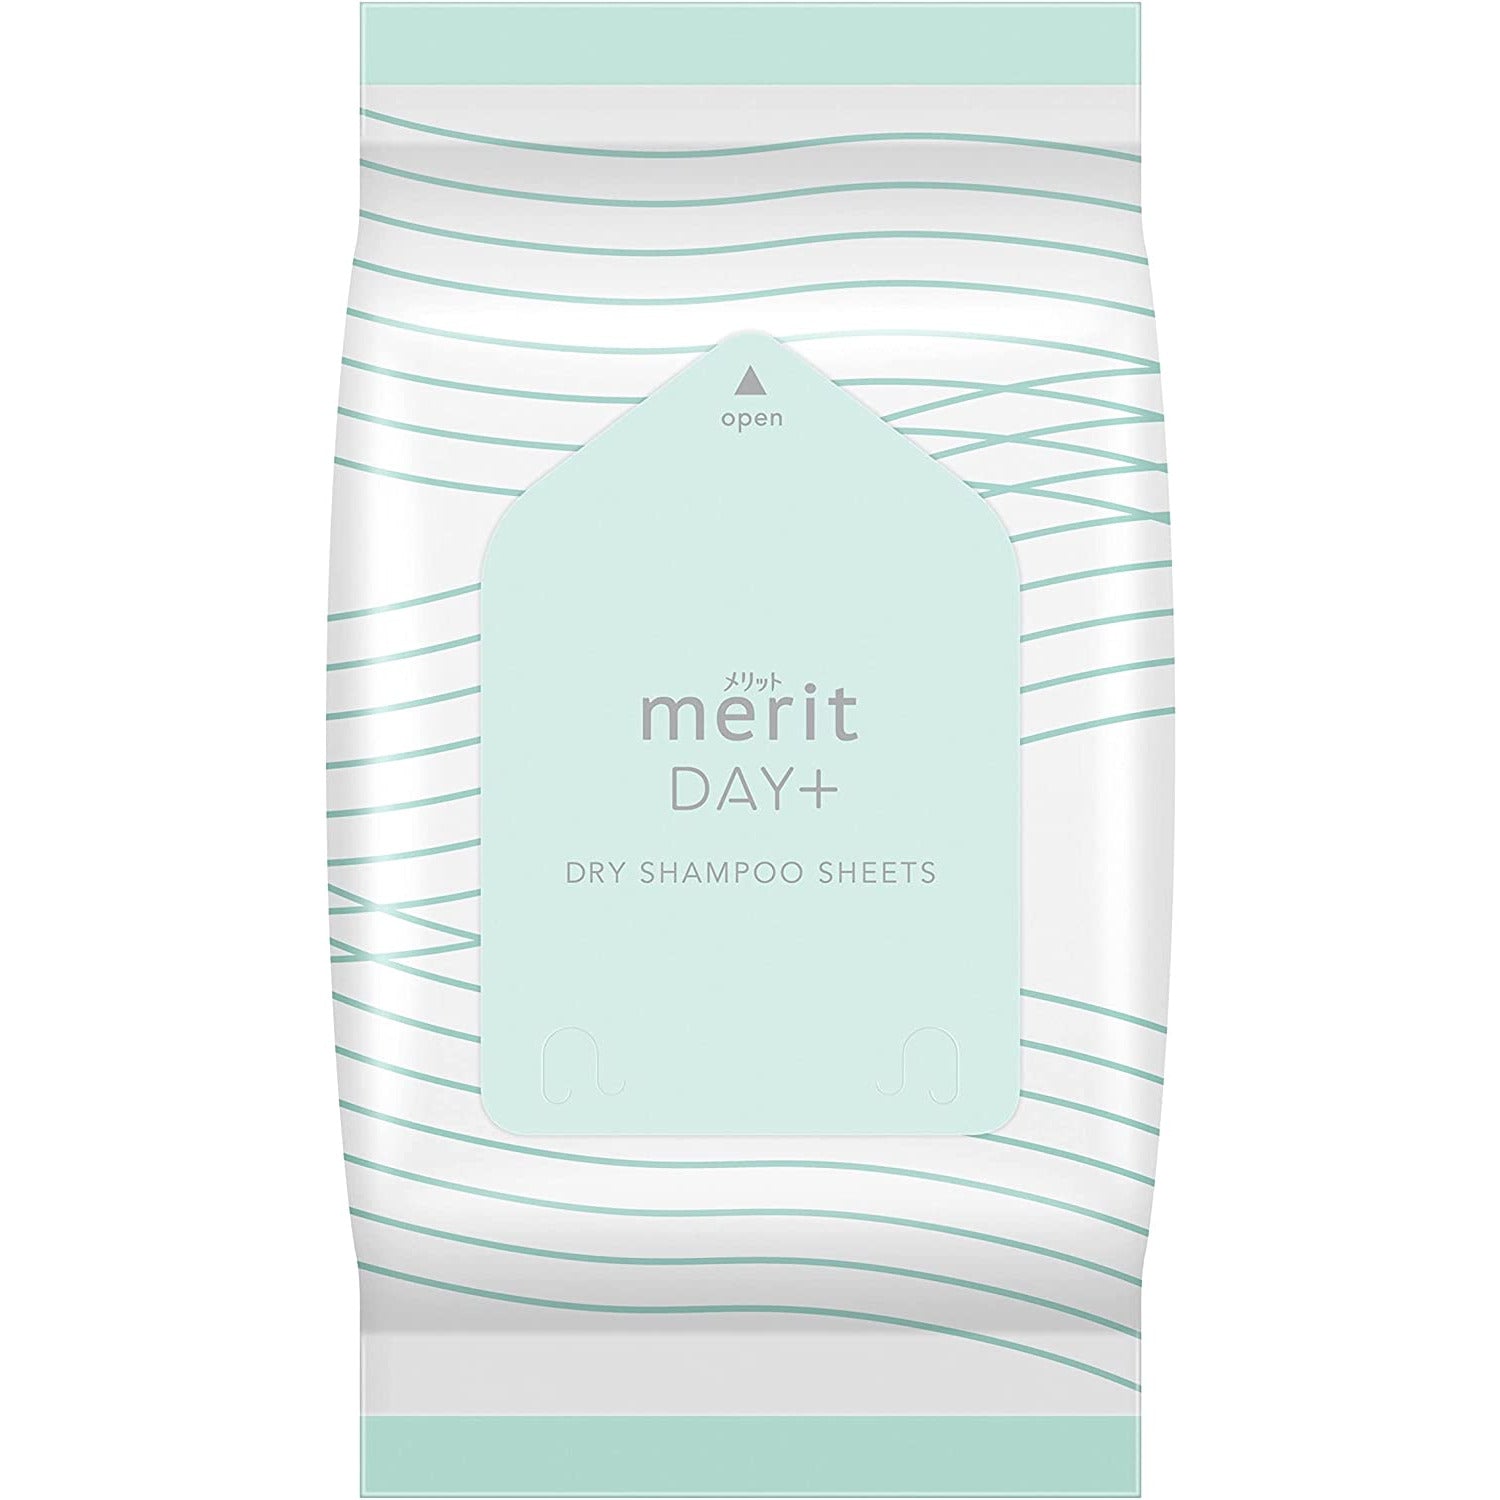 Kao Merit DAY+ Dry Shampoo Sheets 12 Sheets